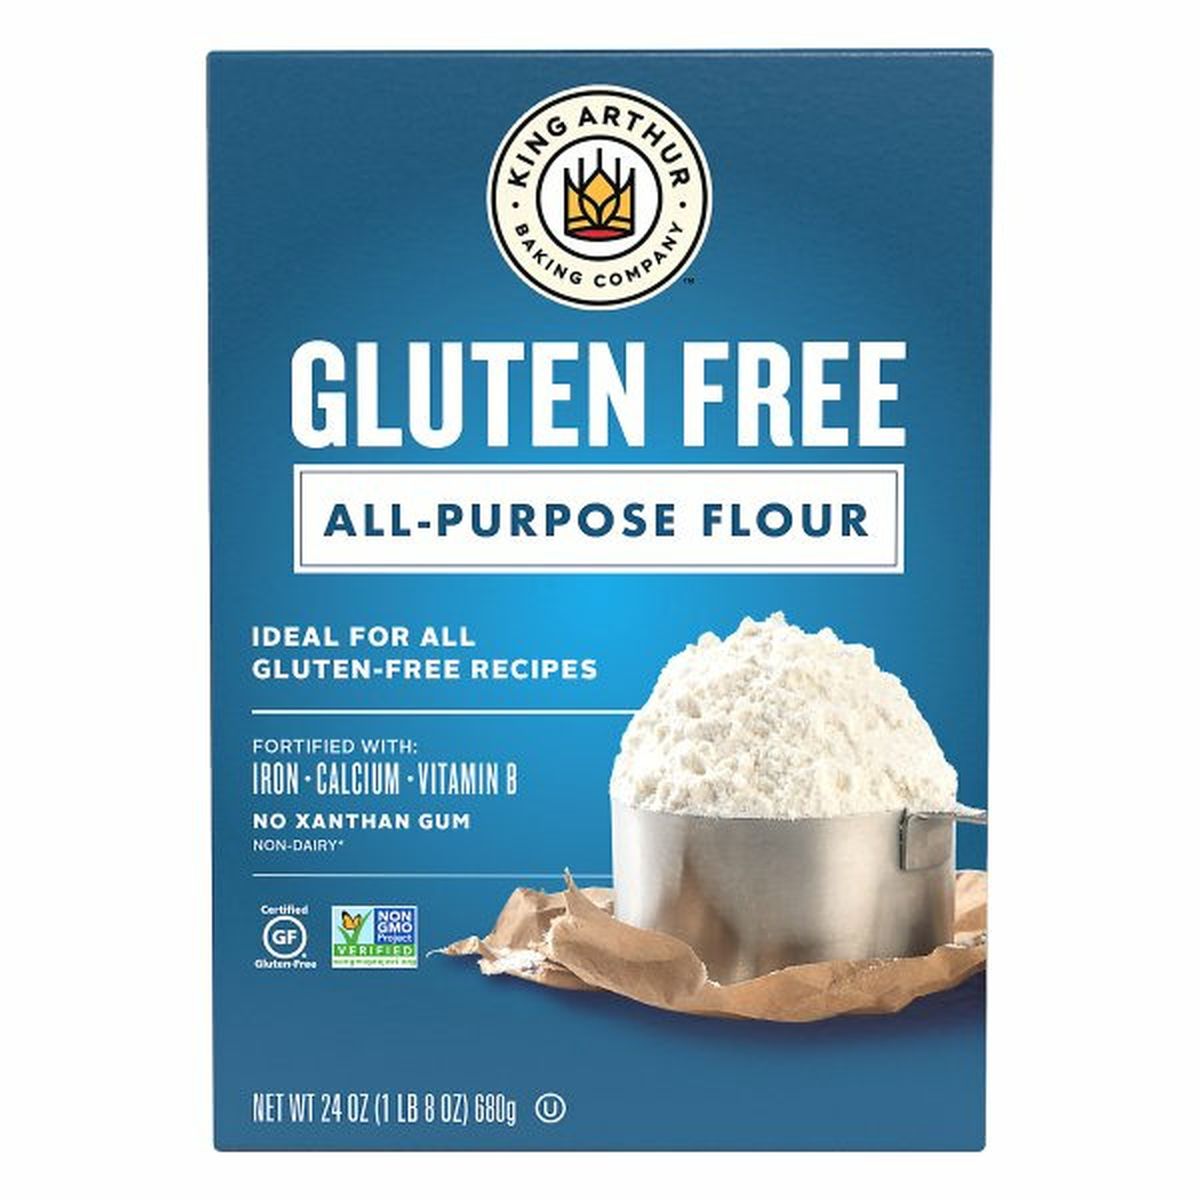 Calories in King Arthur Baking Company All-Purpose Flour, Gluten Free